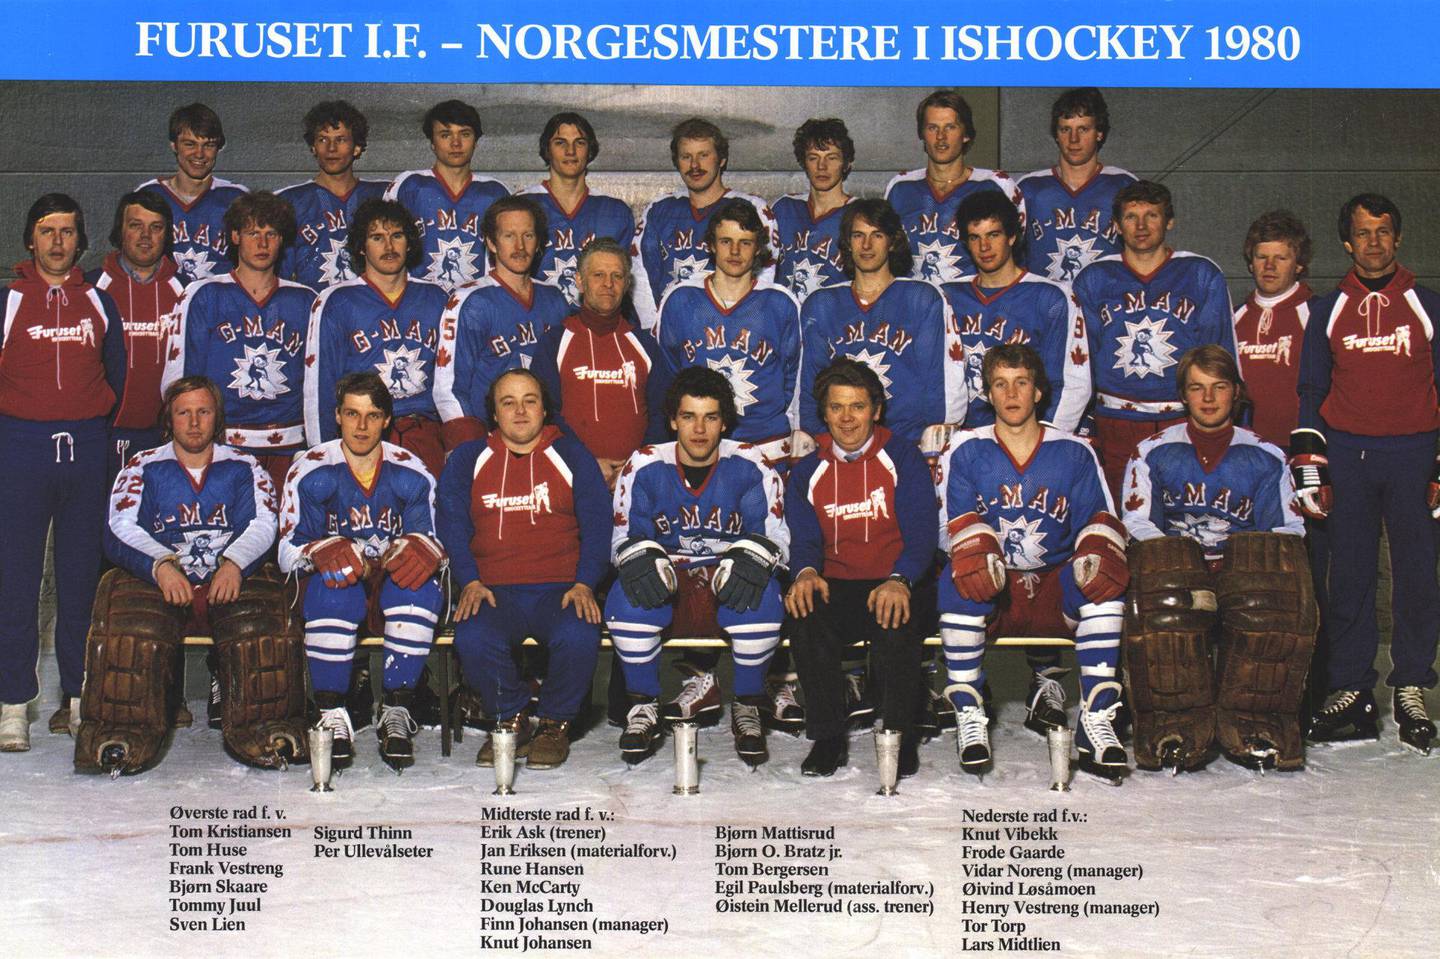 Furuset I.F. – Norgesmestere 1980,